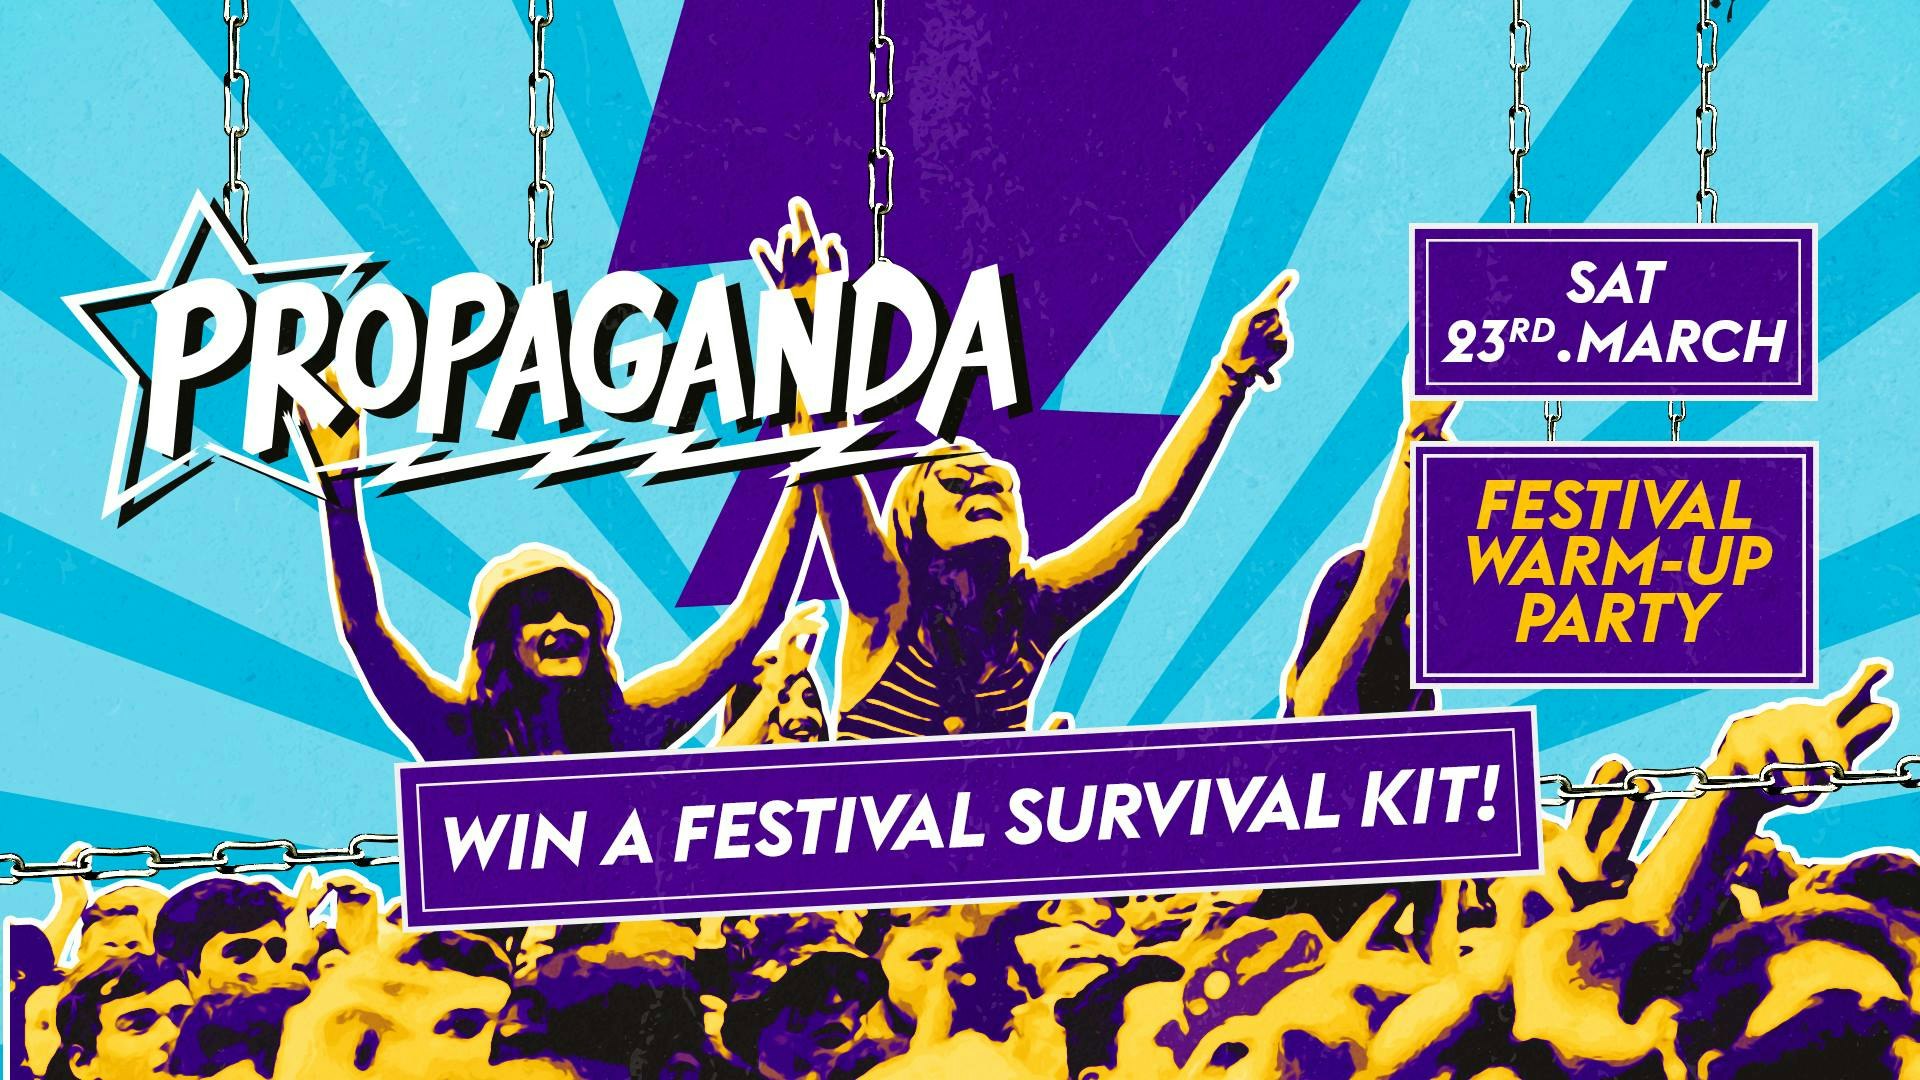 Propaganda London – Festival Warm-Up Party!